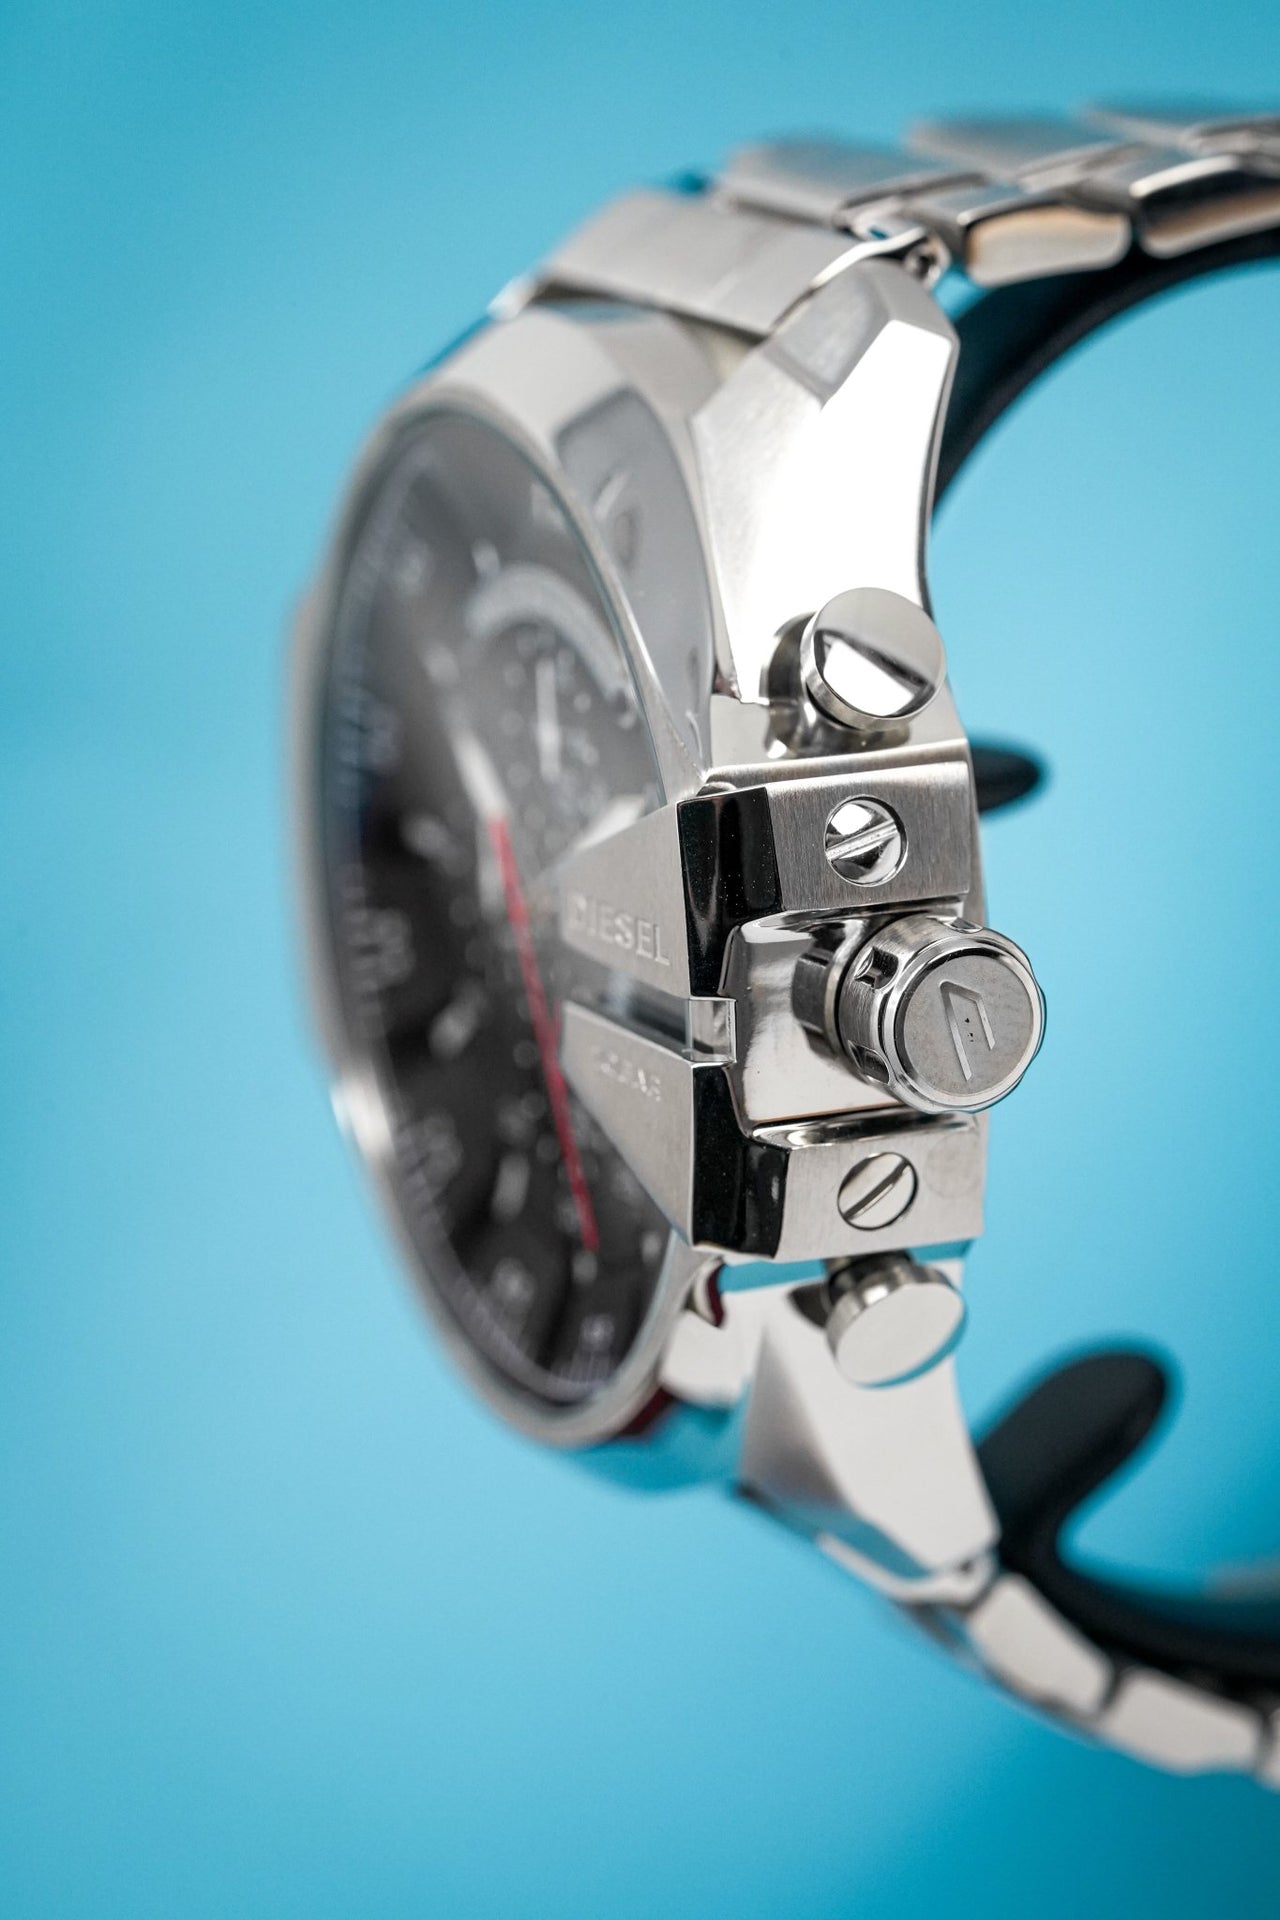 Diesel Men's Chronograph Watch Mega Chief Black Silver - Watches & Crystals